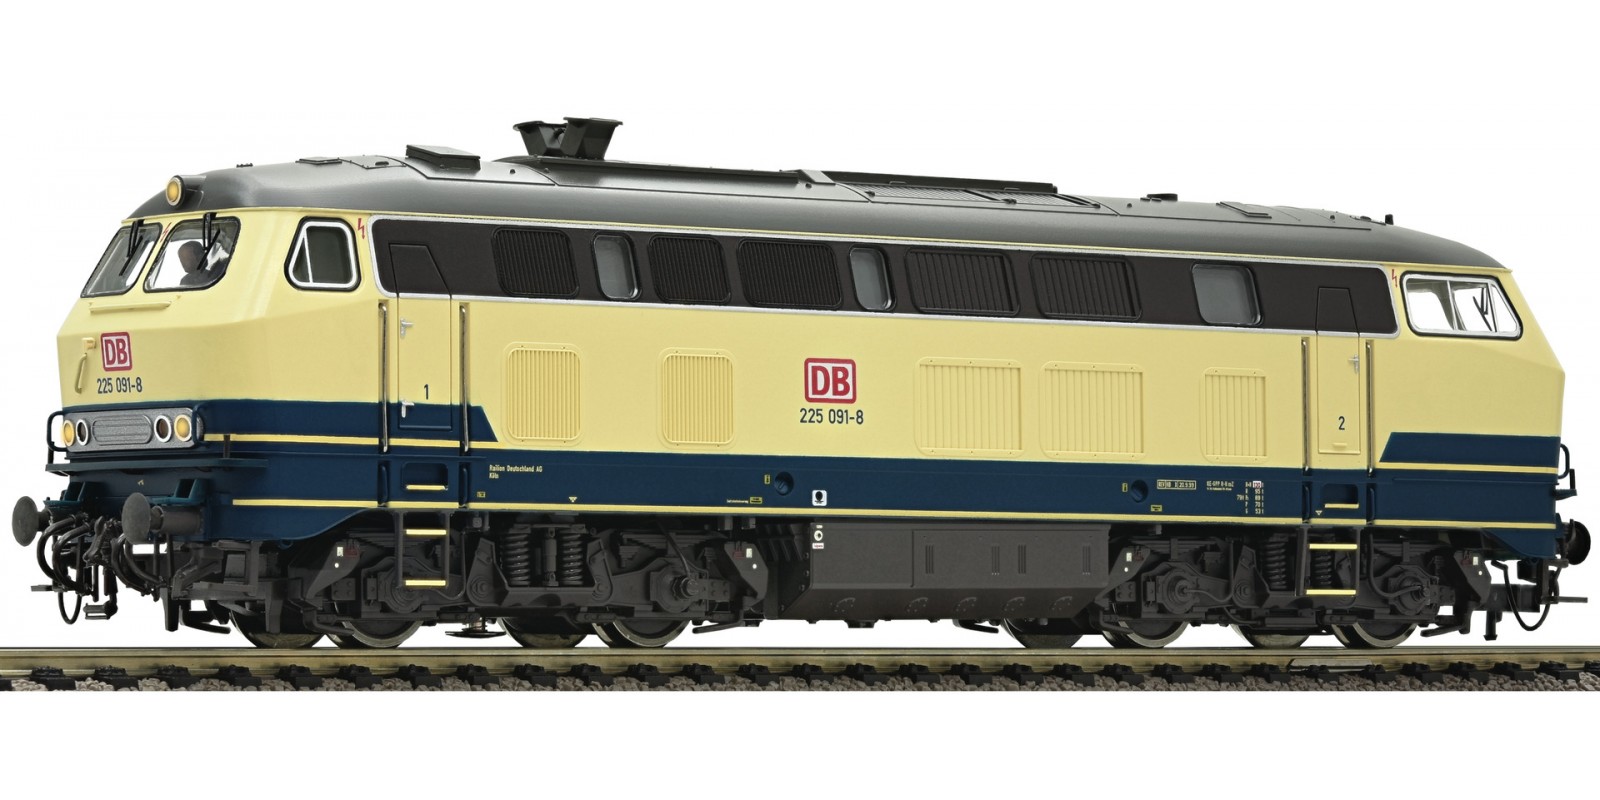 FL424004 - Diesel locomotive class 225, DB AG